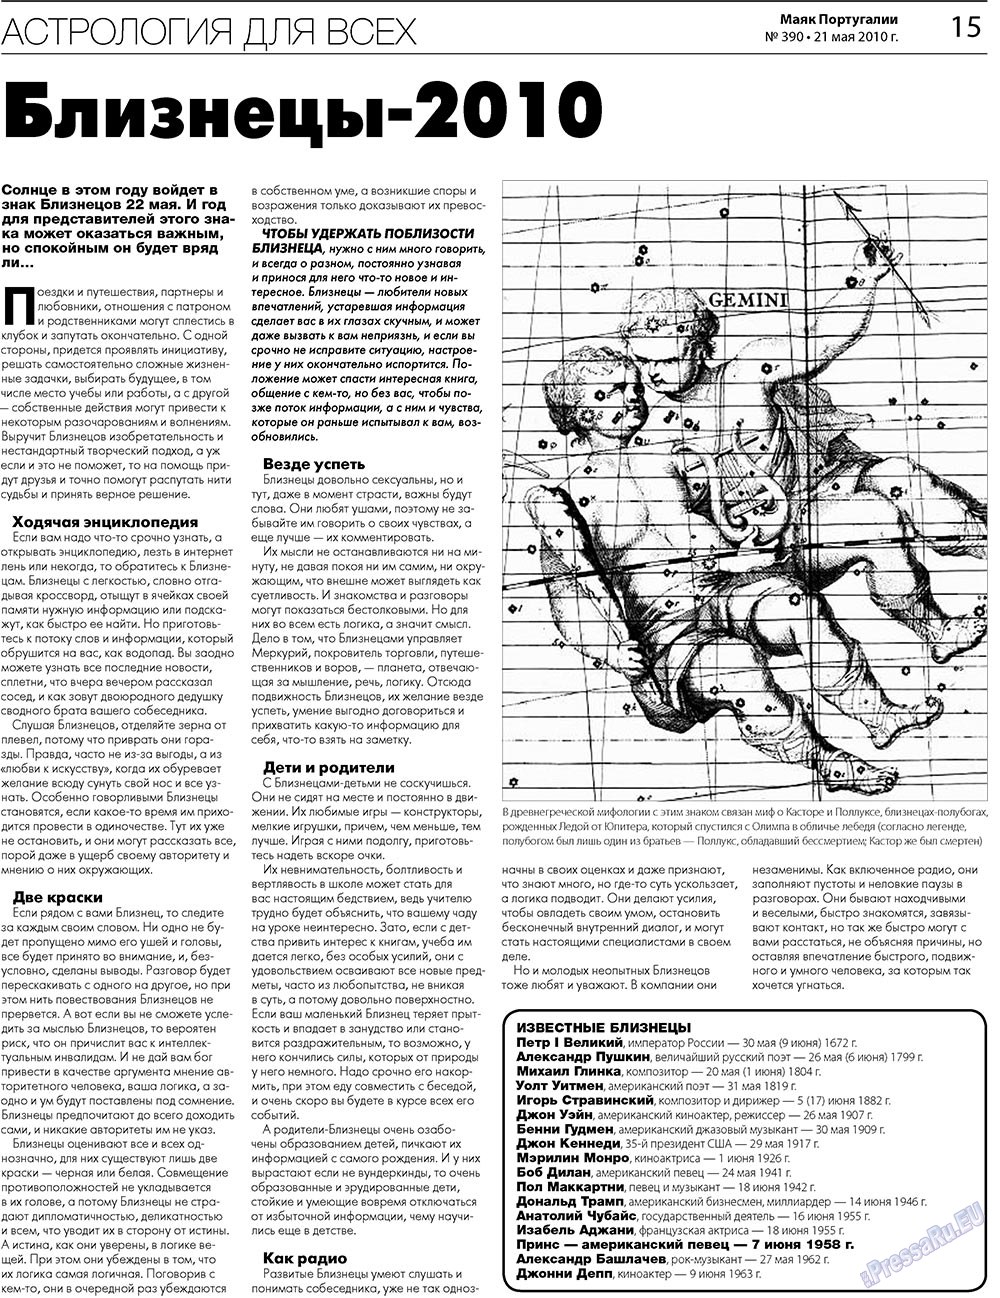 Маяк Португалии, газета. 2010 №390 стр.15